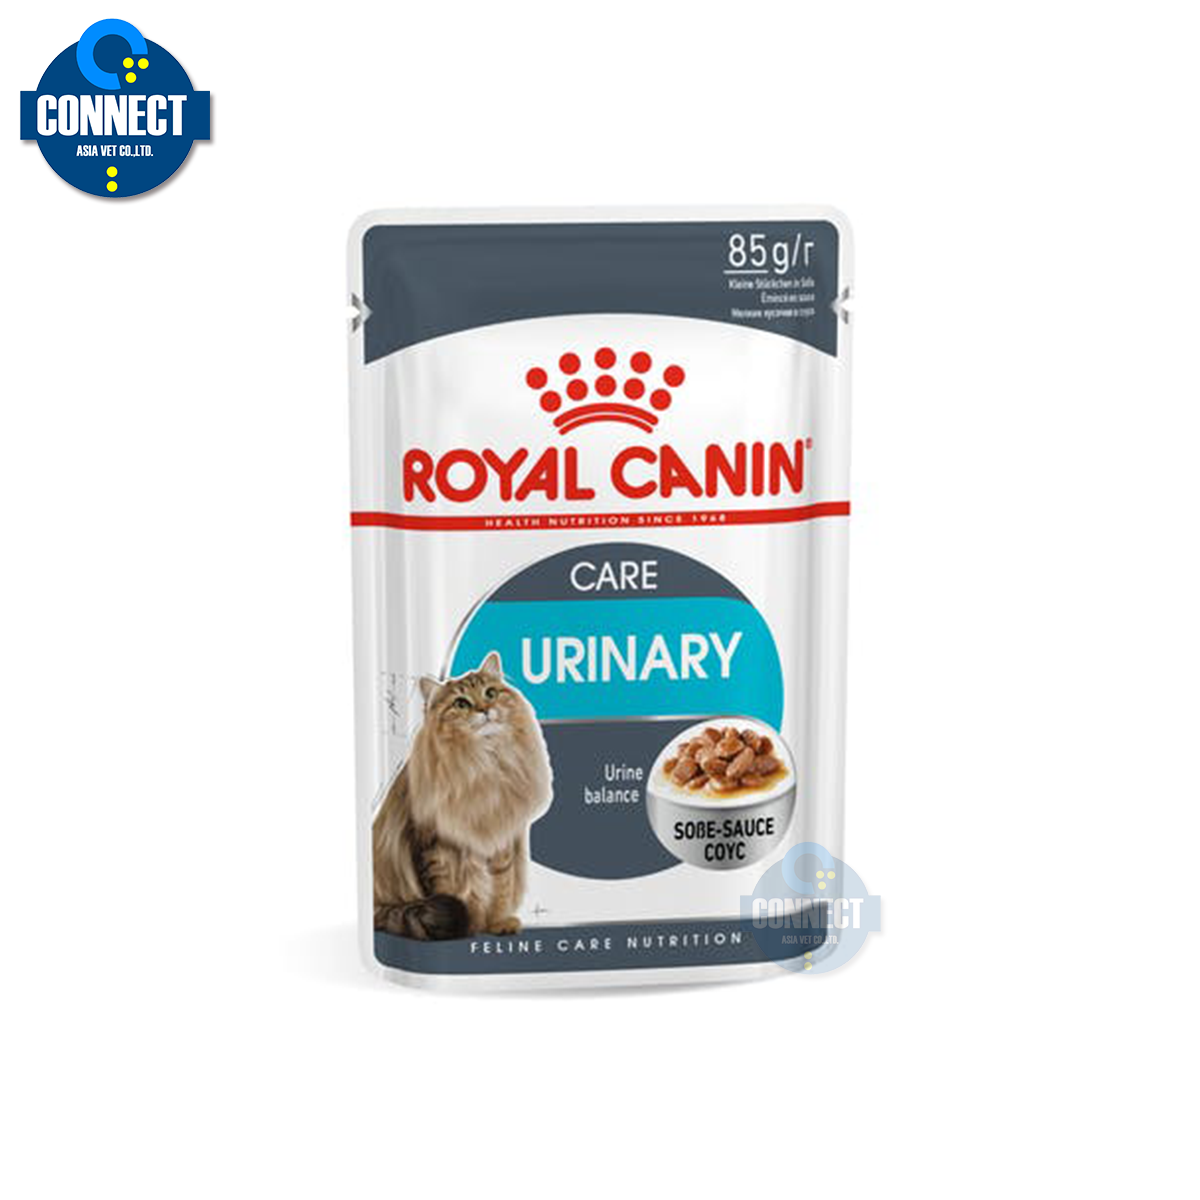 Royal Canin Urinary Care Gravy ขนาด 85 กรัม จำนวน 12 ซอง.